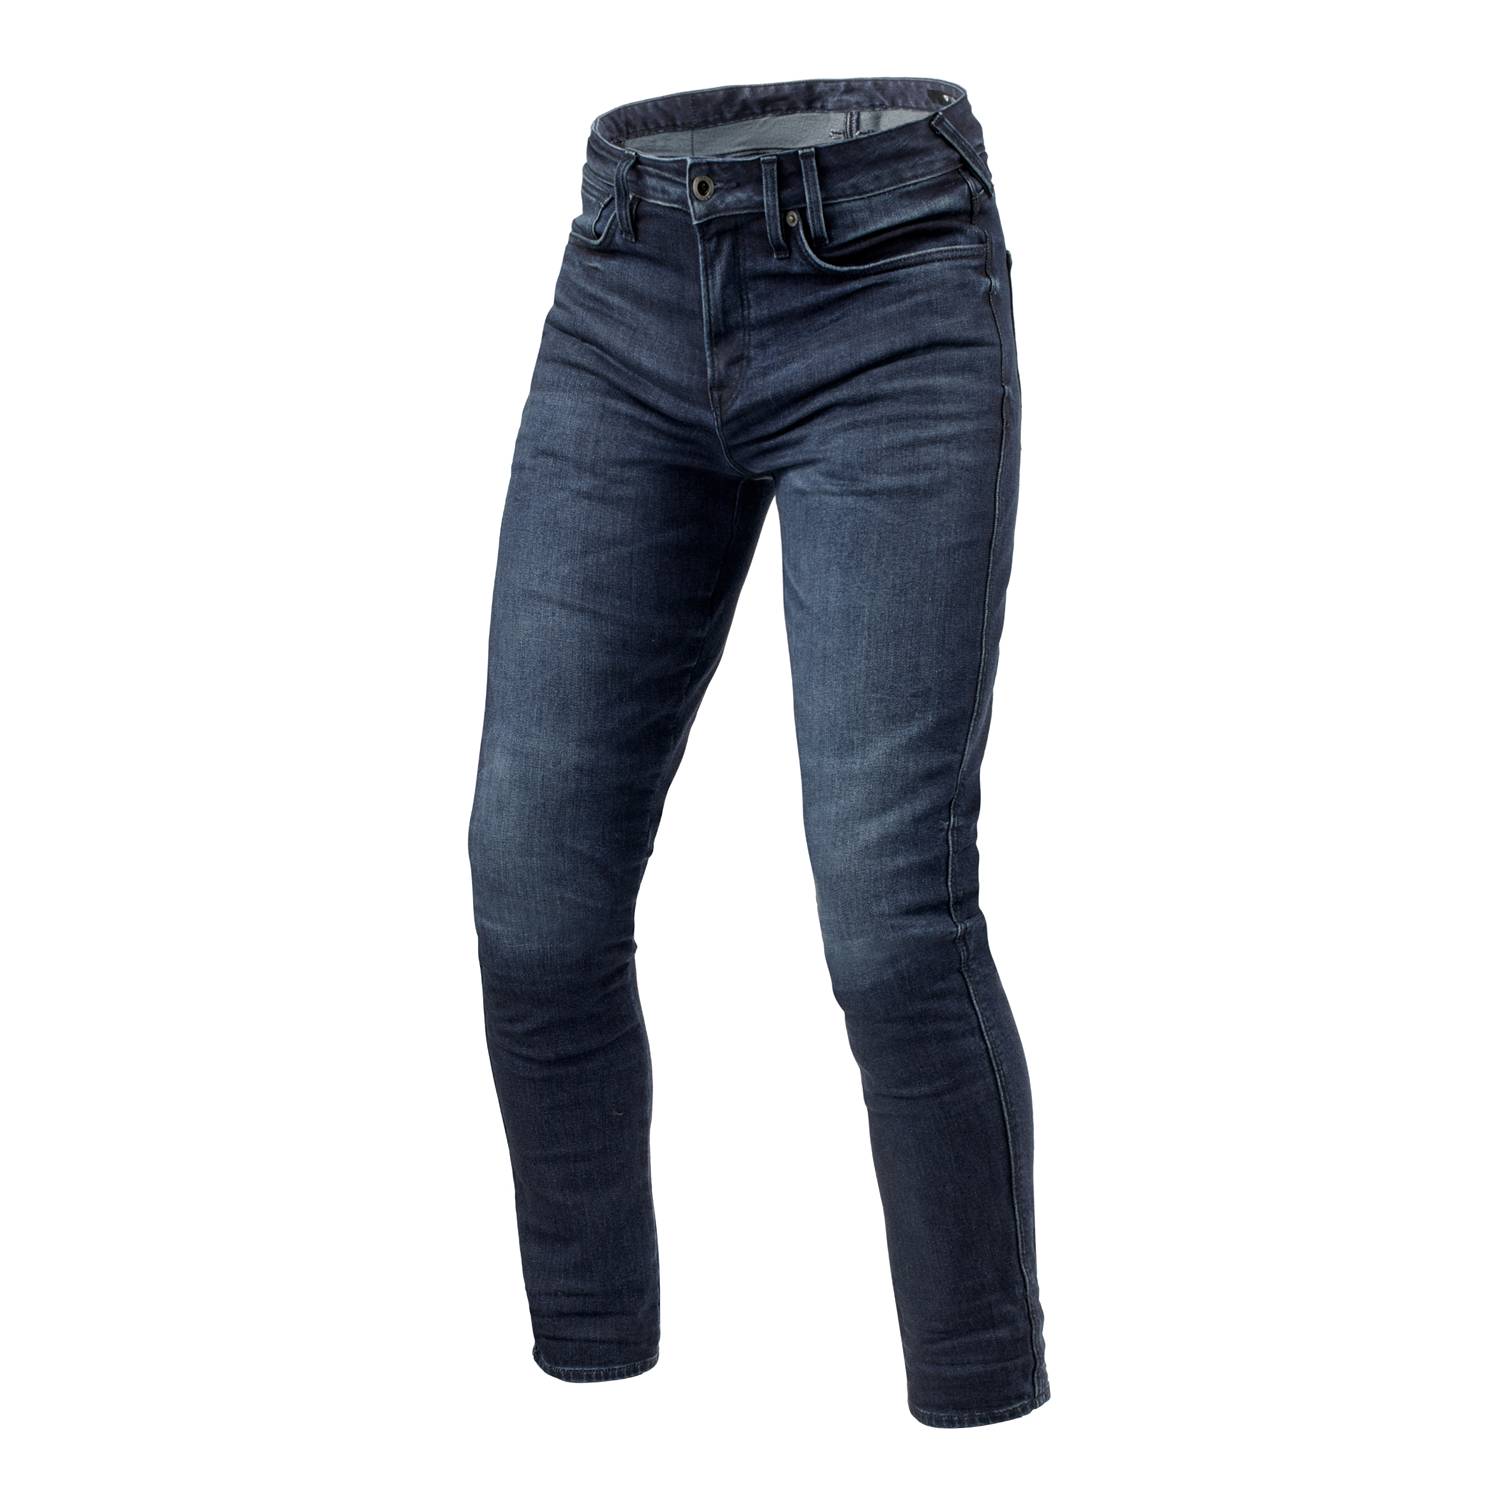 Image of REV'IT! Jeans Carlin SK Dark Blue Used L36 Motorcycle Jeans Größe L36/W31